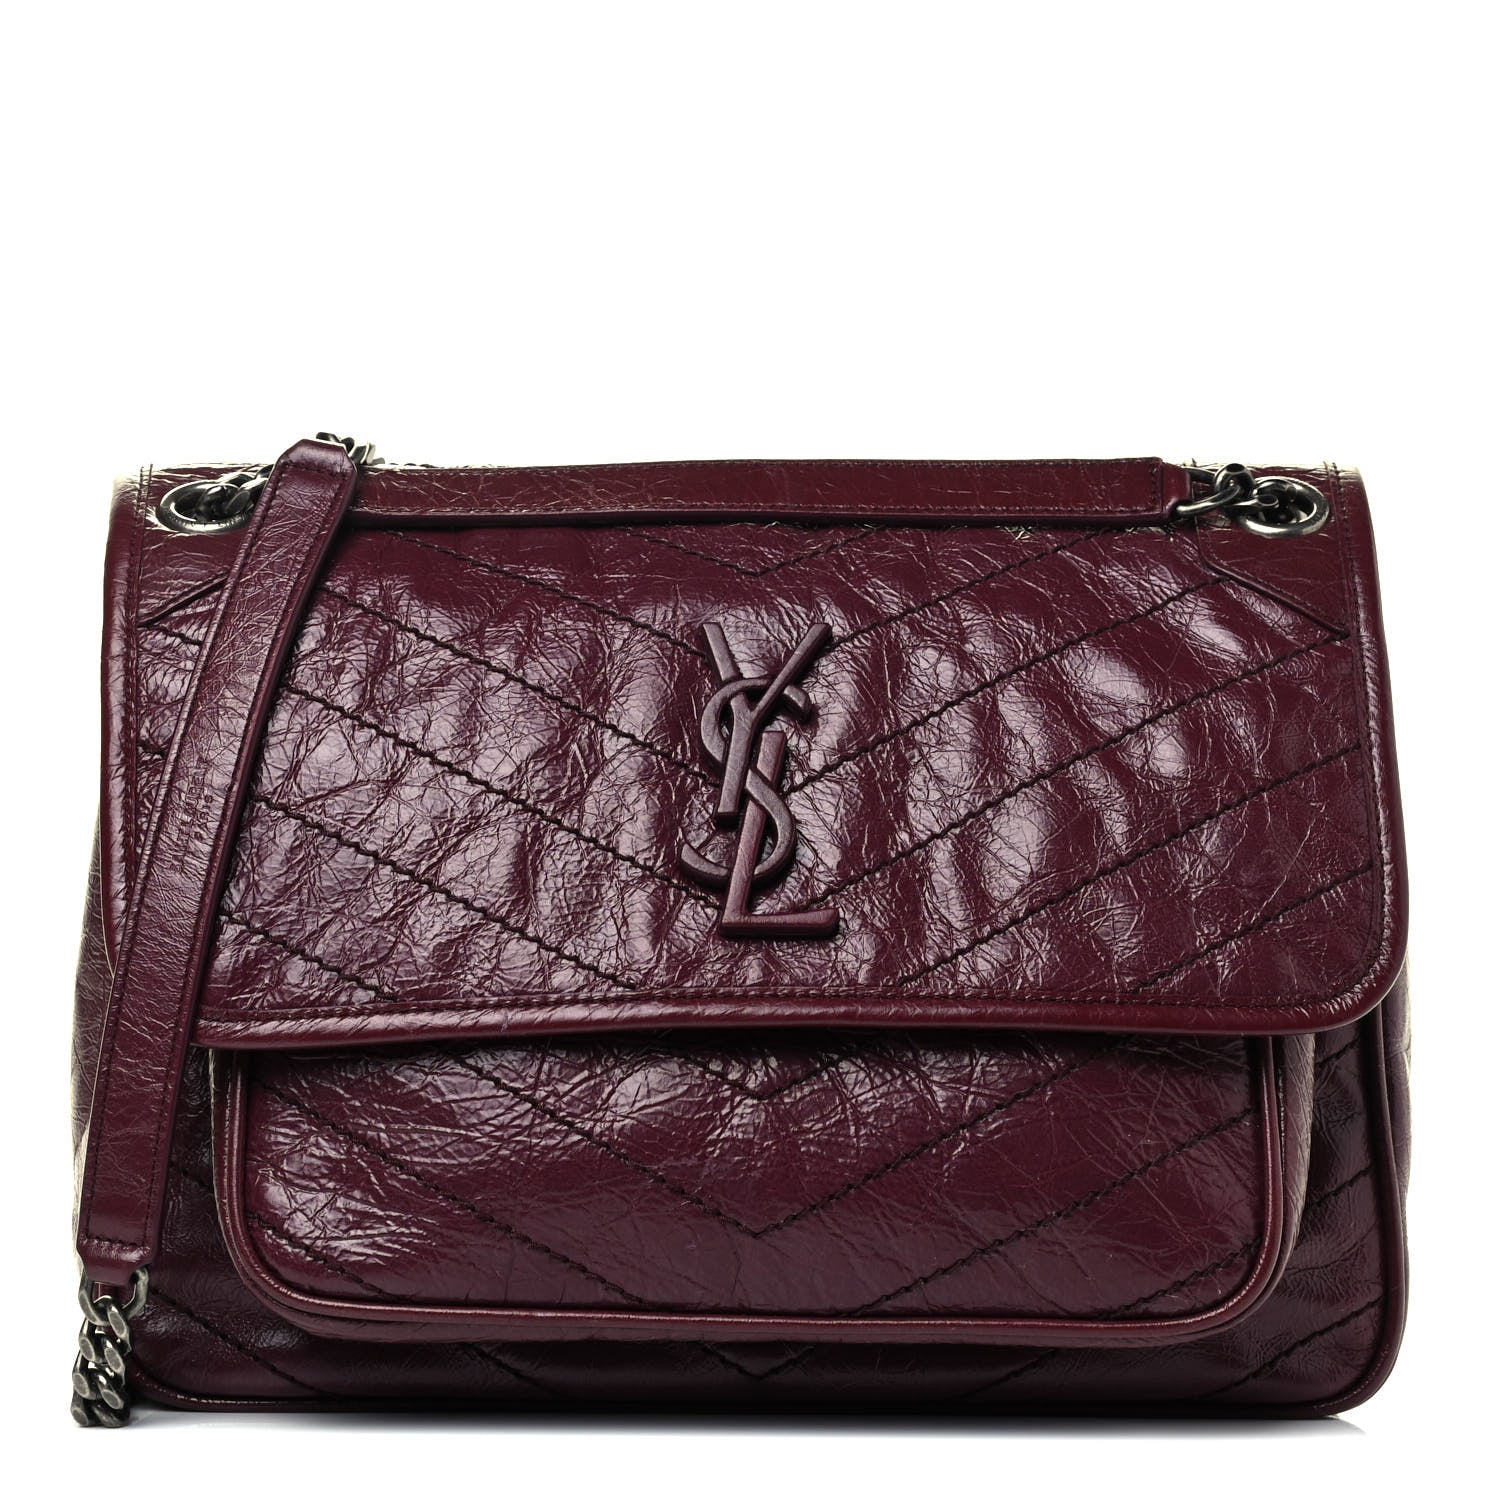 Saint Laurent Niki Medium Matelasse Leather Burgundy Satchel Bag 498894 at_Queen_Bee_of_Beverly_Hills